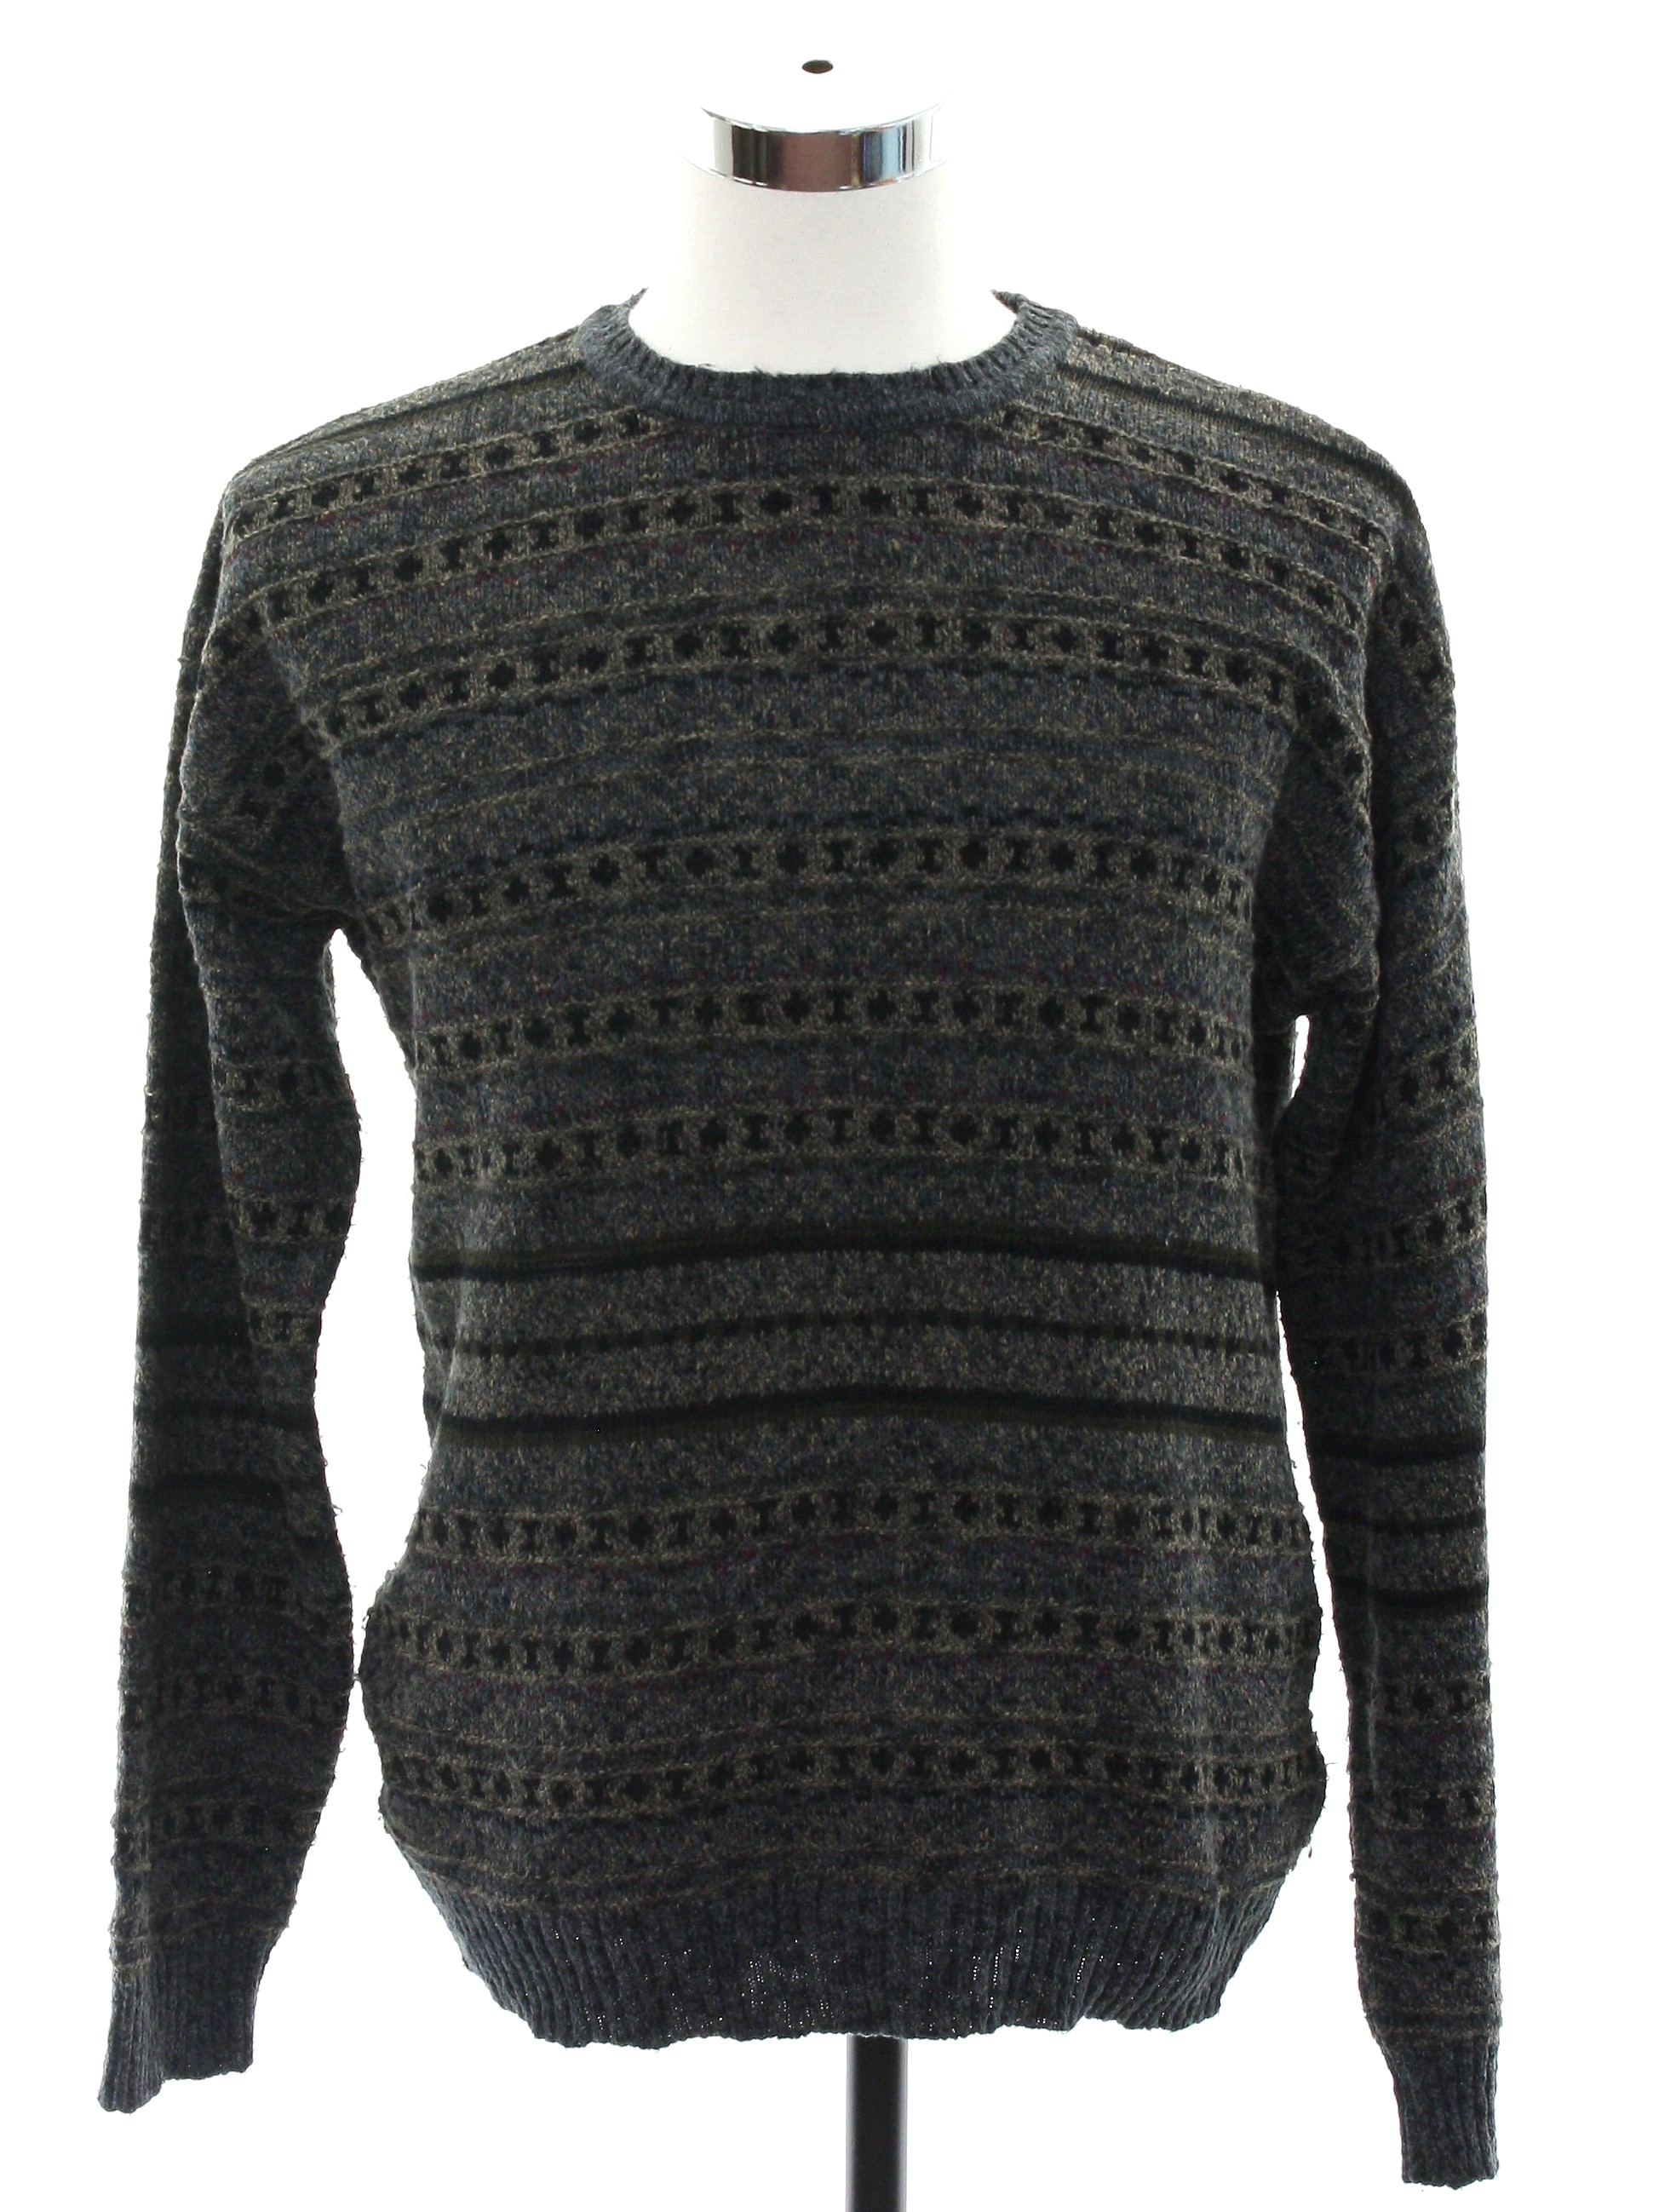 Retro 80s Sweater (Dockers) : 80s -Dockers- Mens grey, black, brown and ...